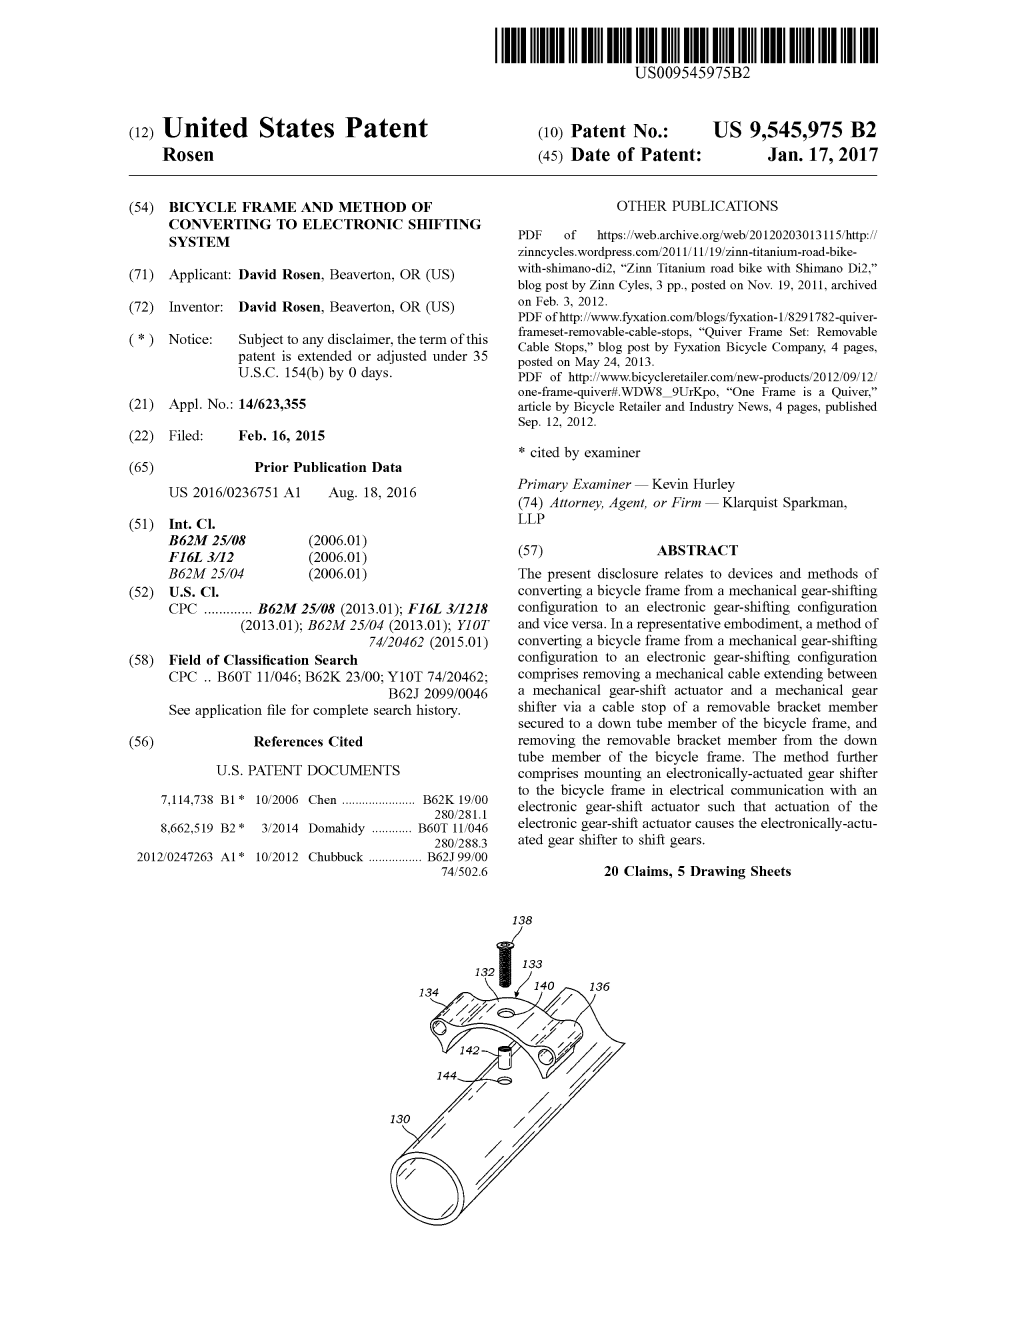 (12) United States Patent (10) Patent No.: US 9,545,975 B2 Rosen (45) Date of Patent: Jan